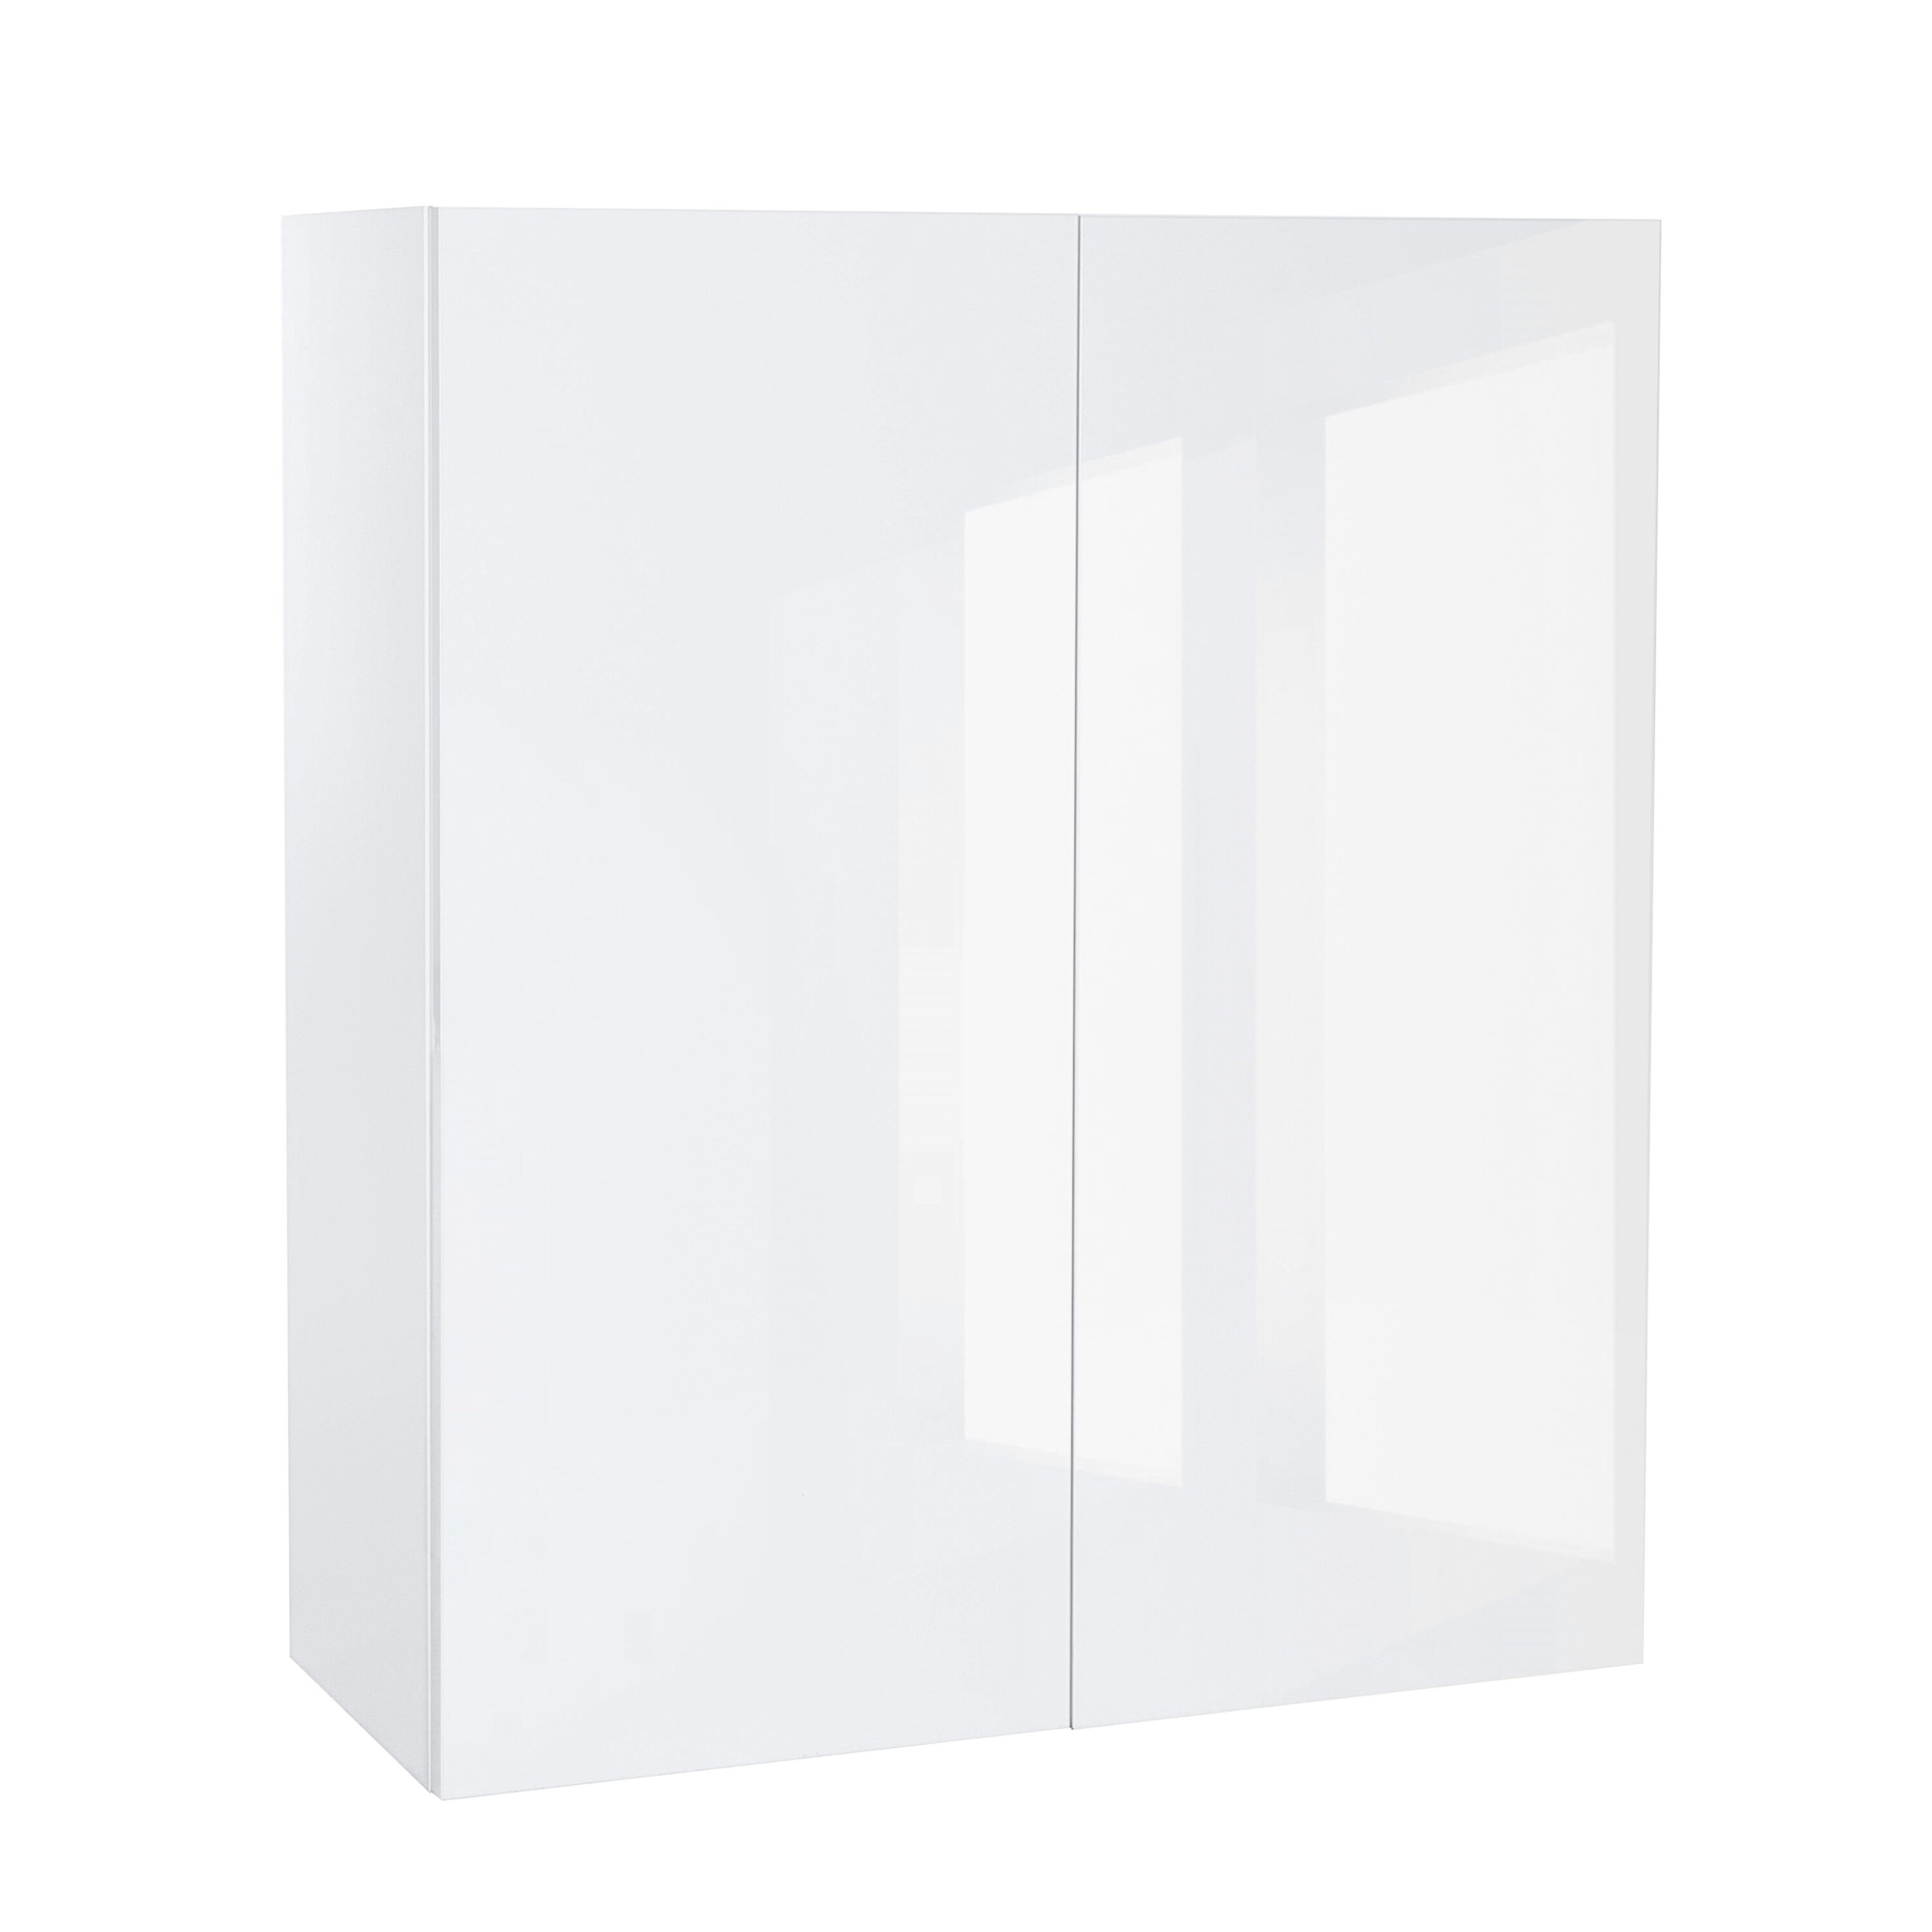 High-Gloss Acrylic Slab, Acrylic IKEA Cabinet Fronts